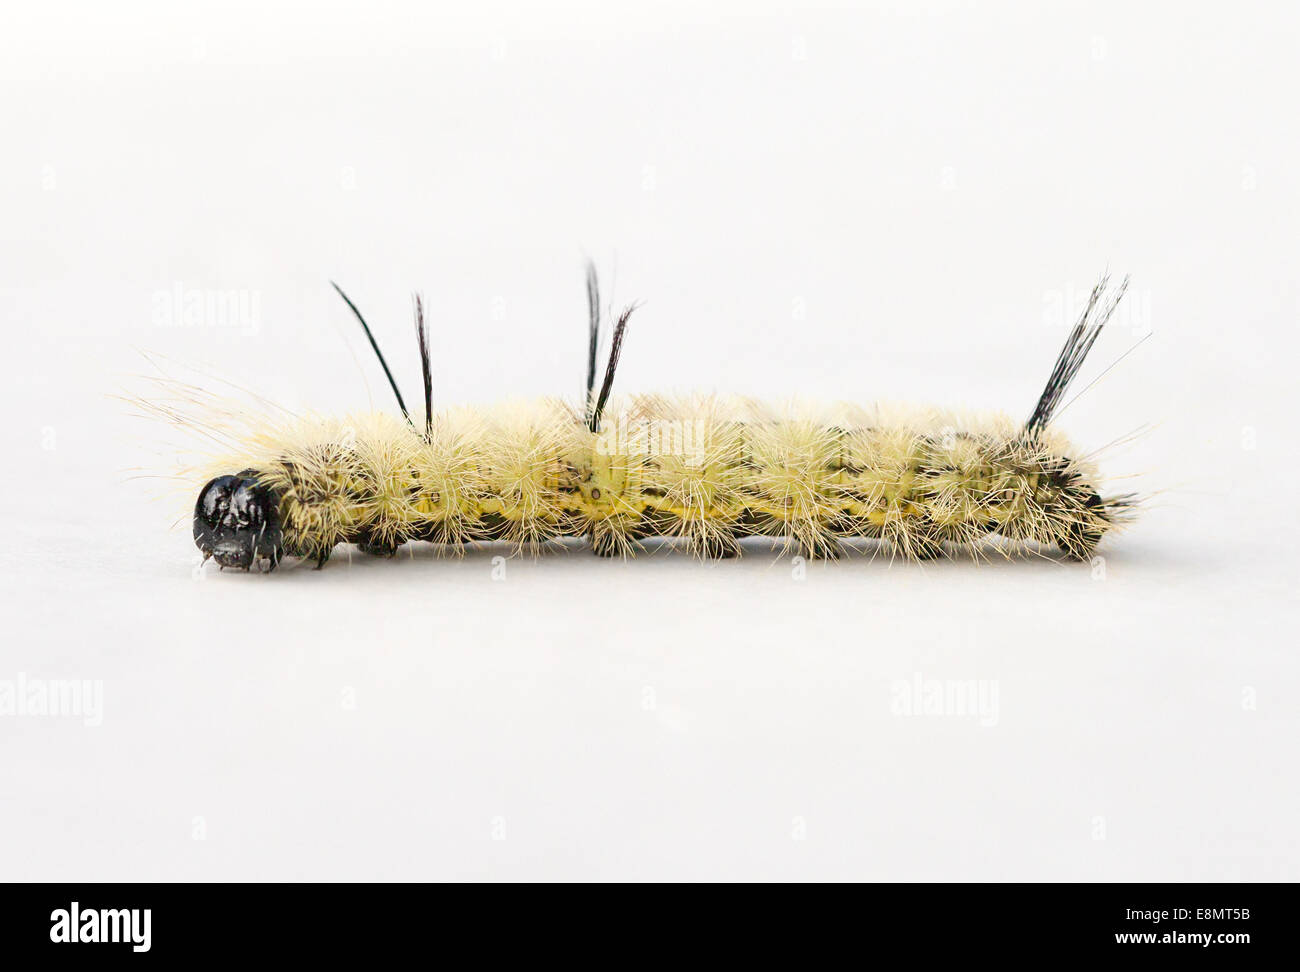 American Dagger Moth Caterpillar (Acronicta americana) on a white background Stock Photo